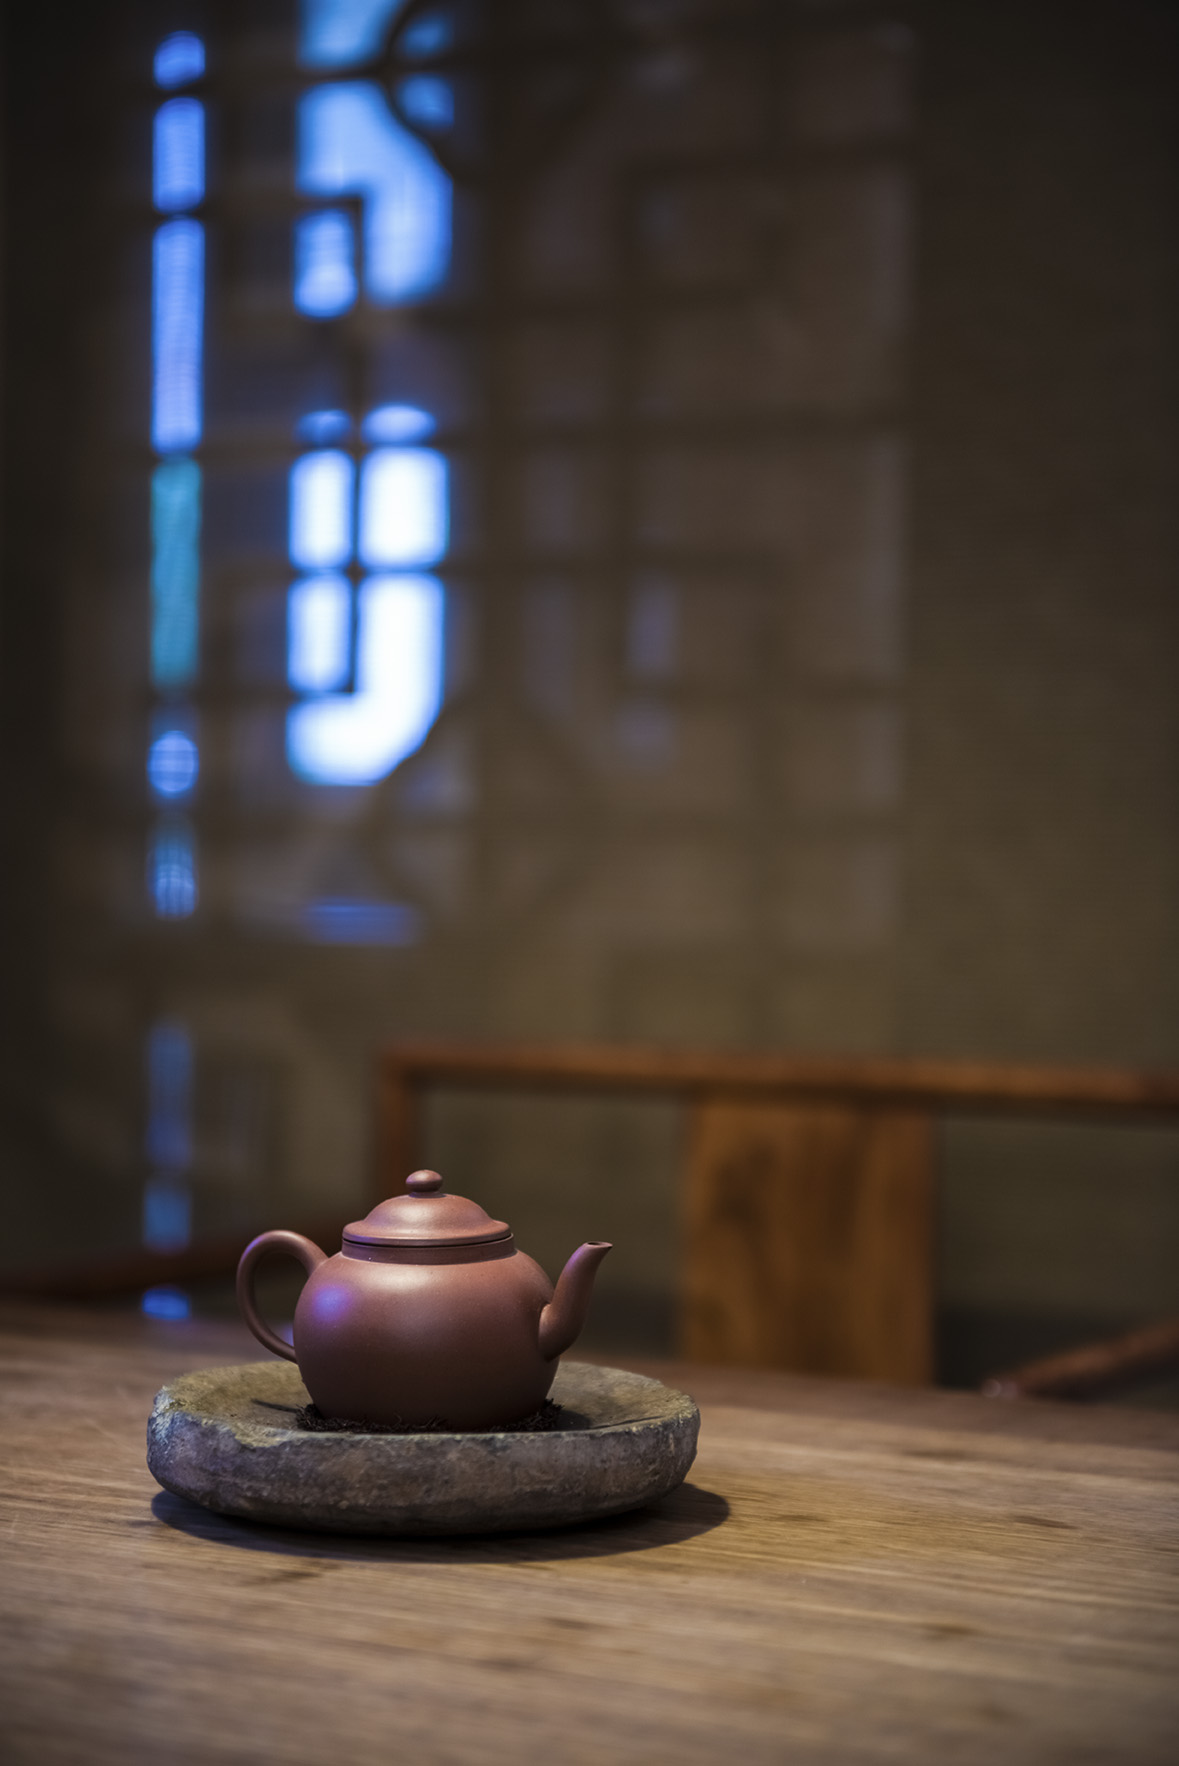 湖隐茶书屋 | 吉合品牌管理<br/> Huyin Tea House | Jihe Brand Management